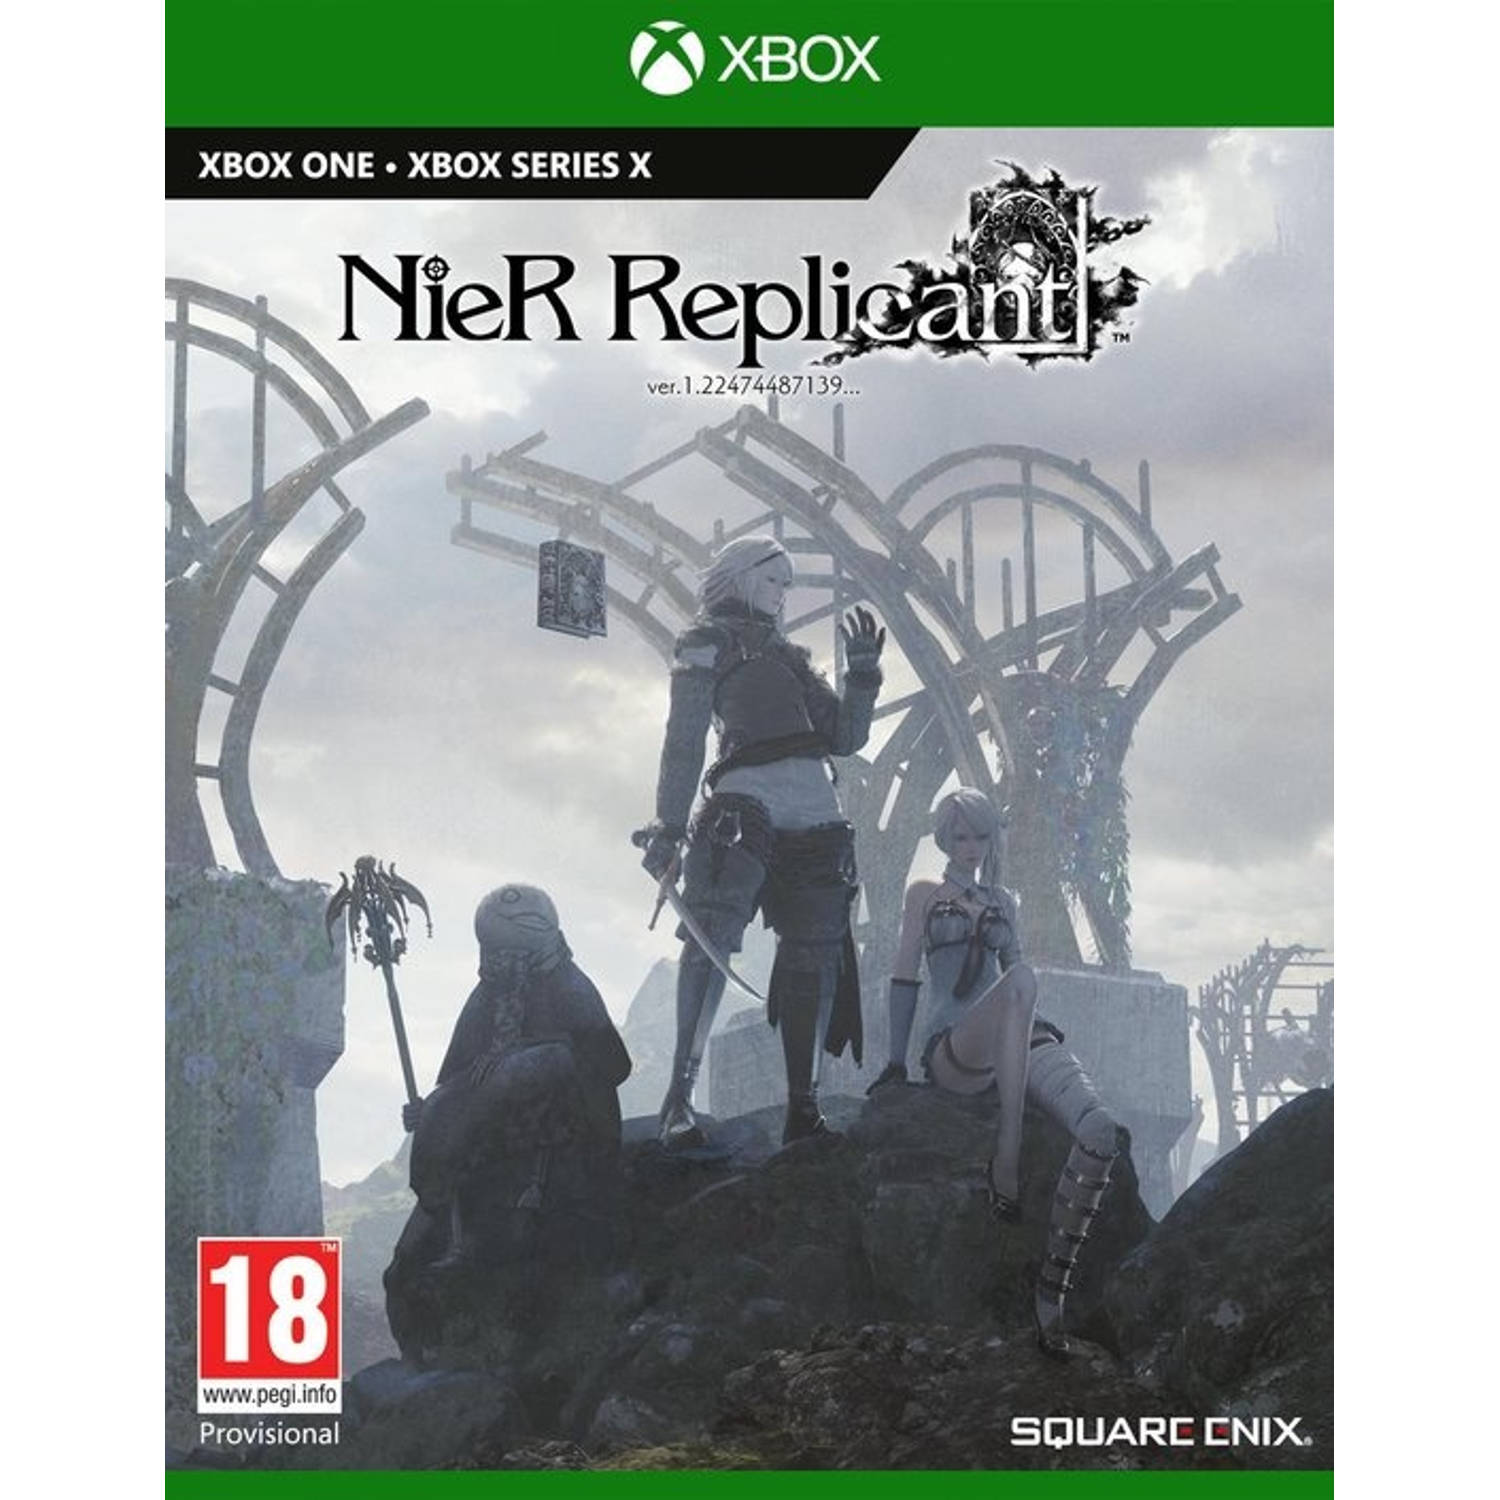 NieR Replicant ver.1.22474487139 Xbox One-Series X